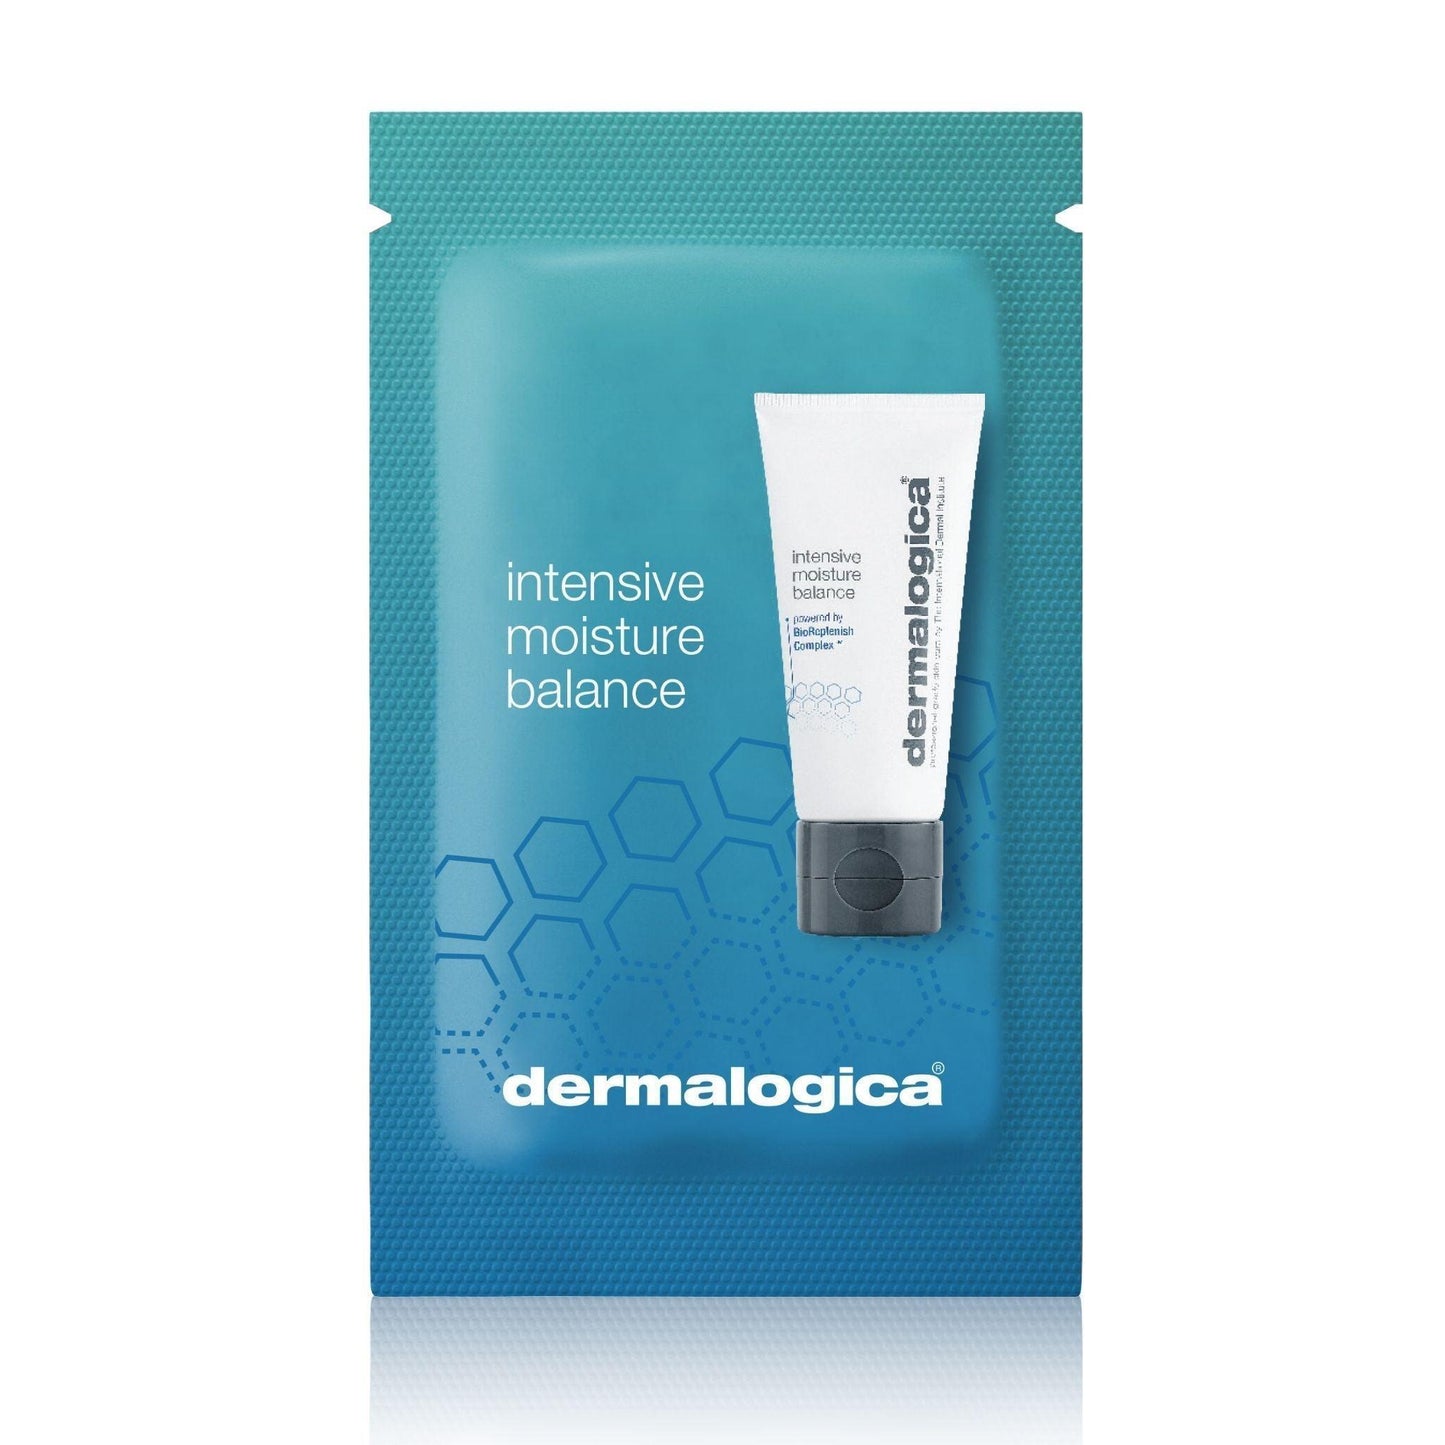 » intensive moisture balance moisturizer 2.0 sachet (100% off) - Dermalogica Malaysia